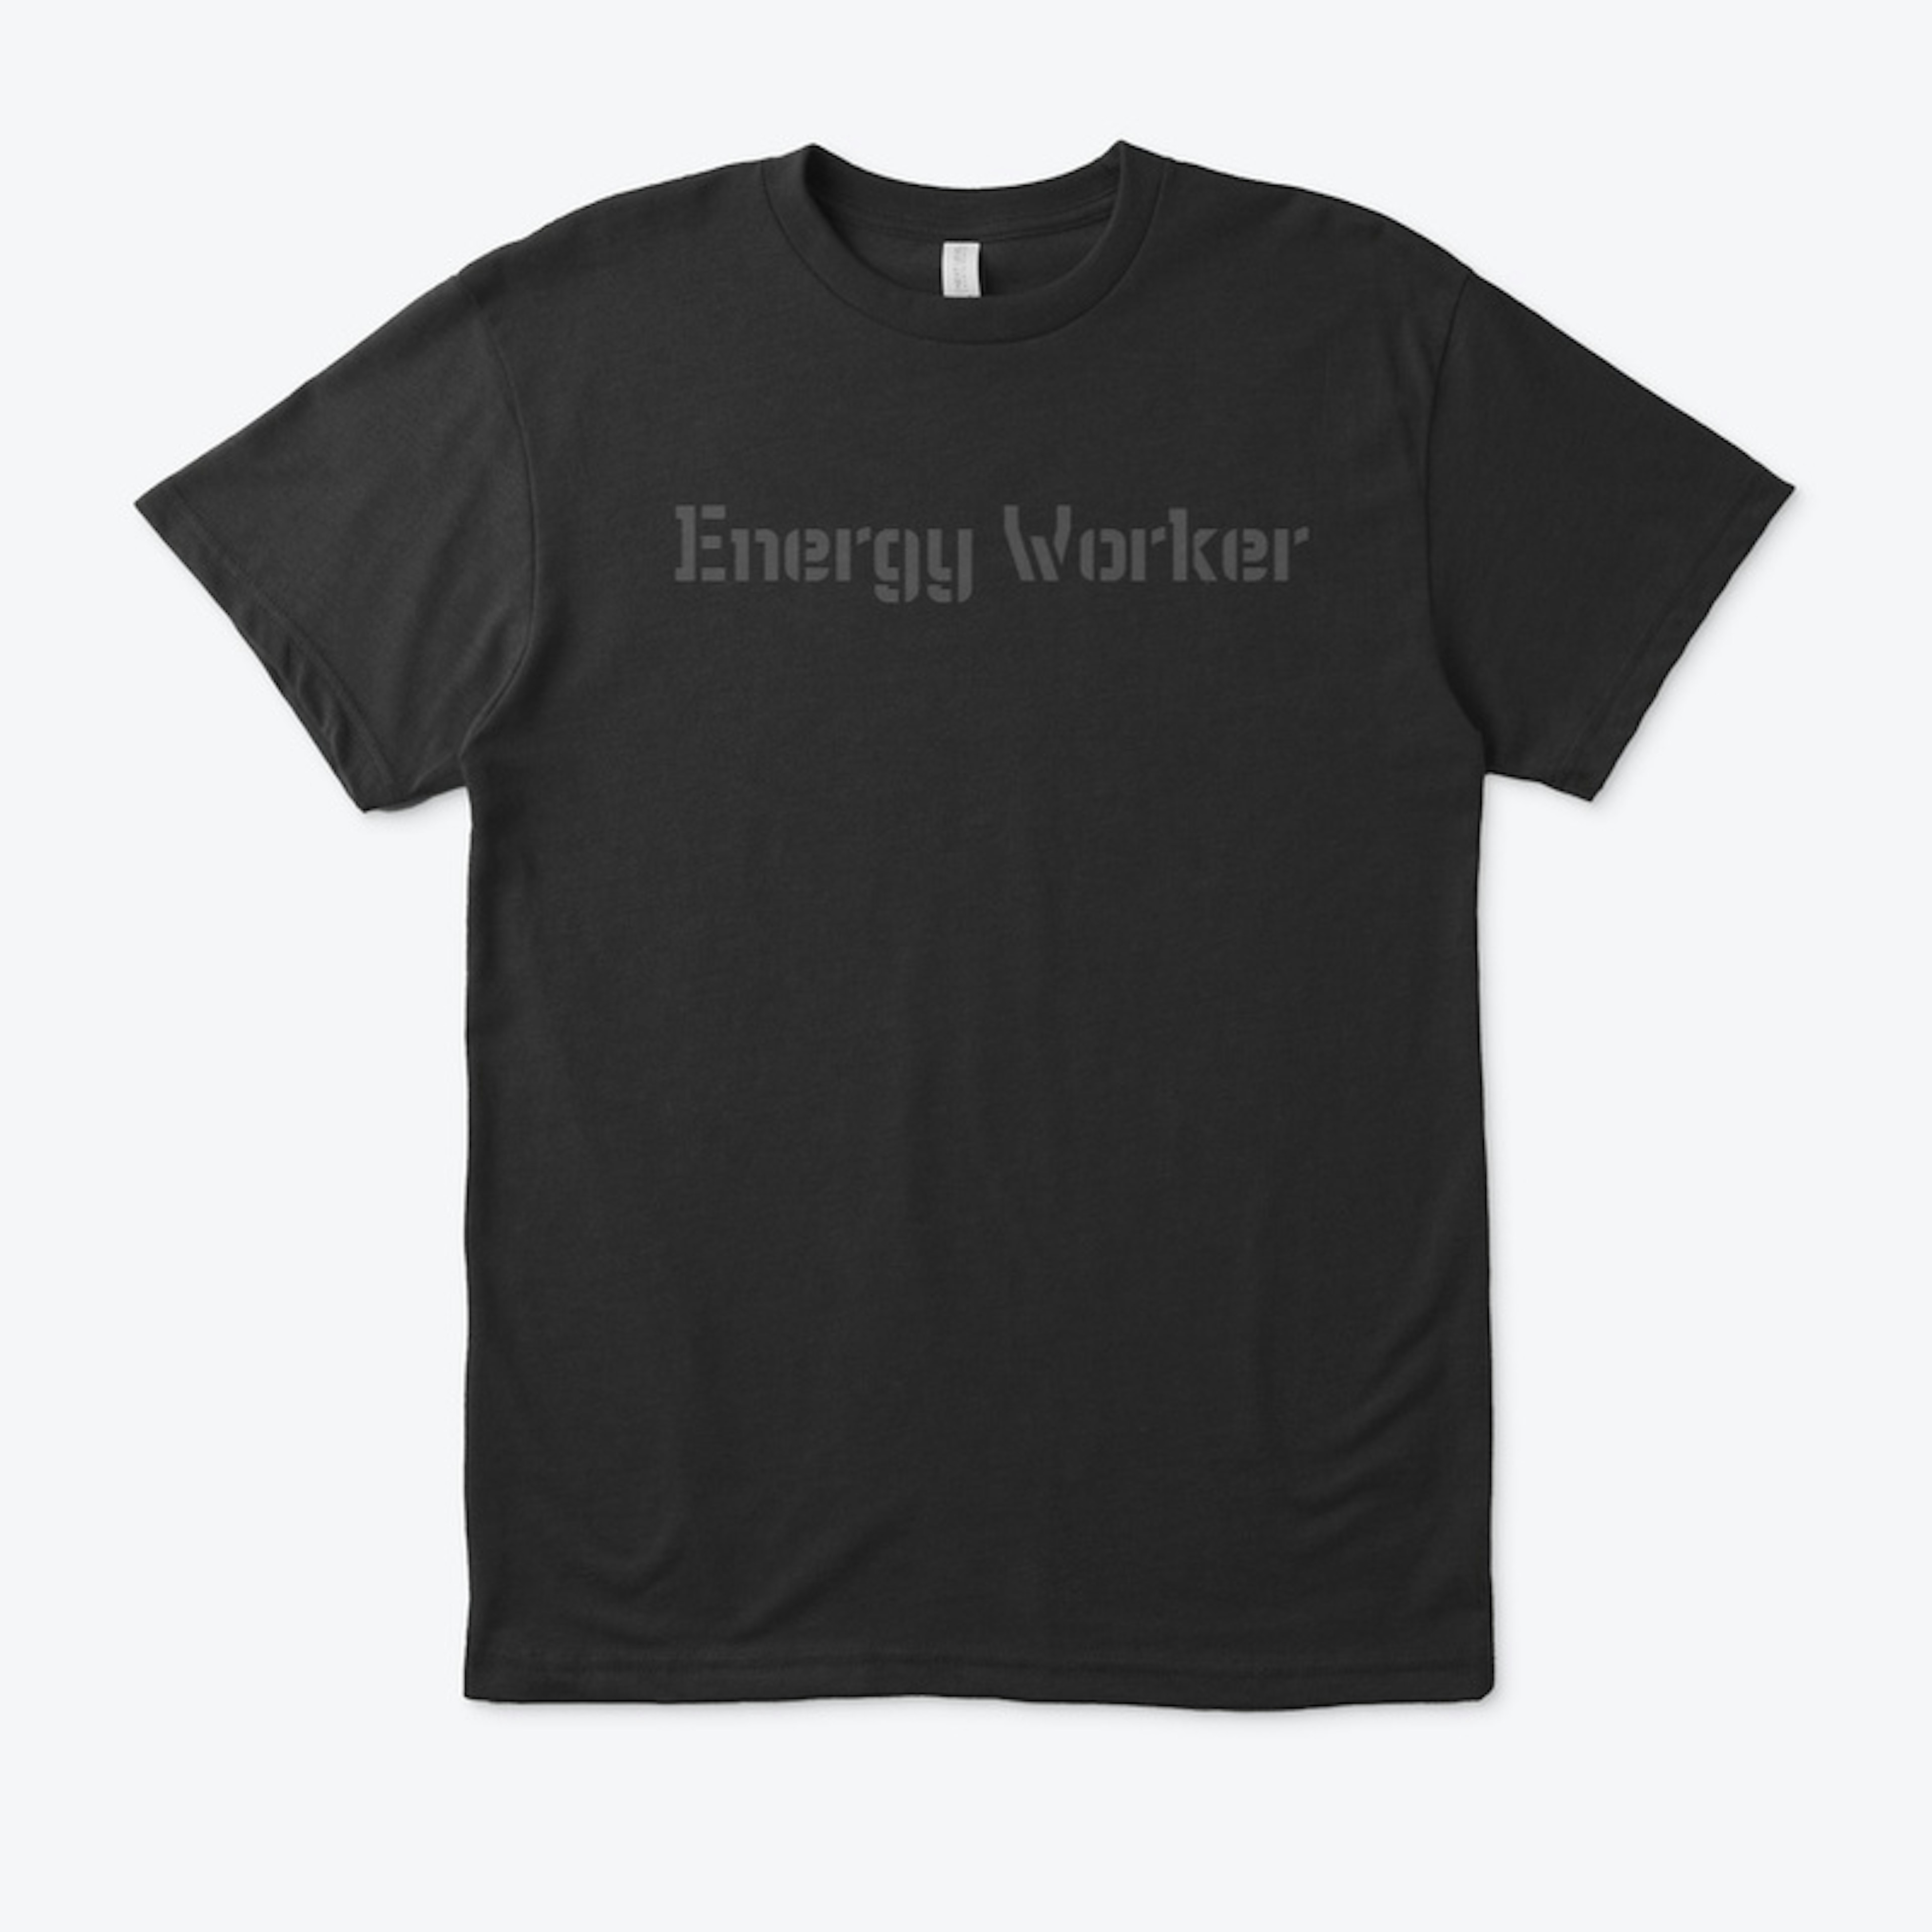 Energy Worker